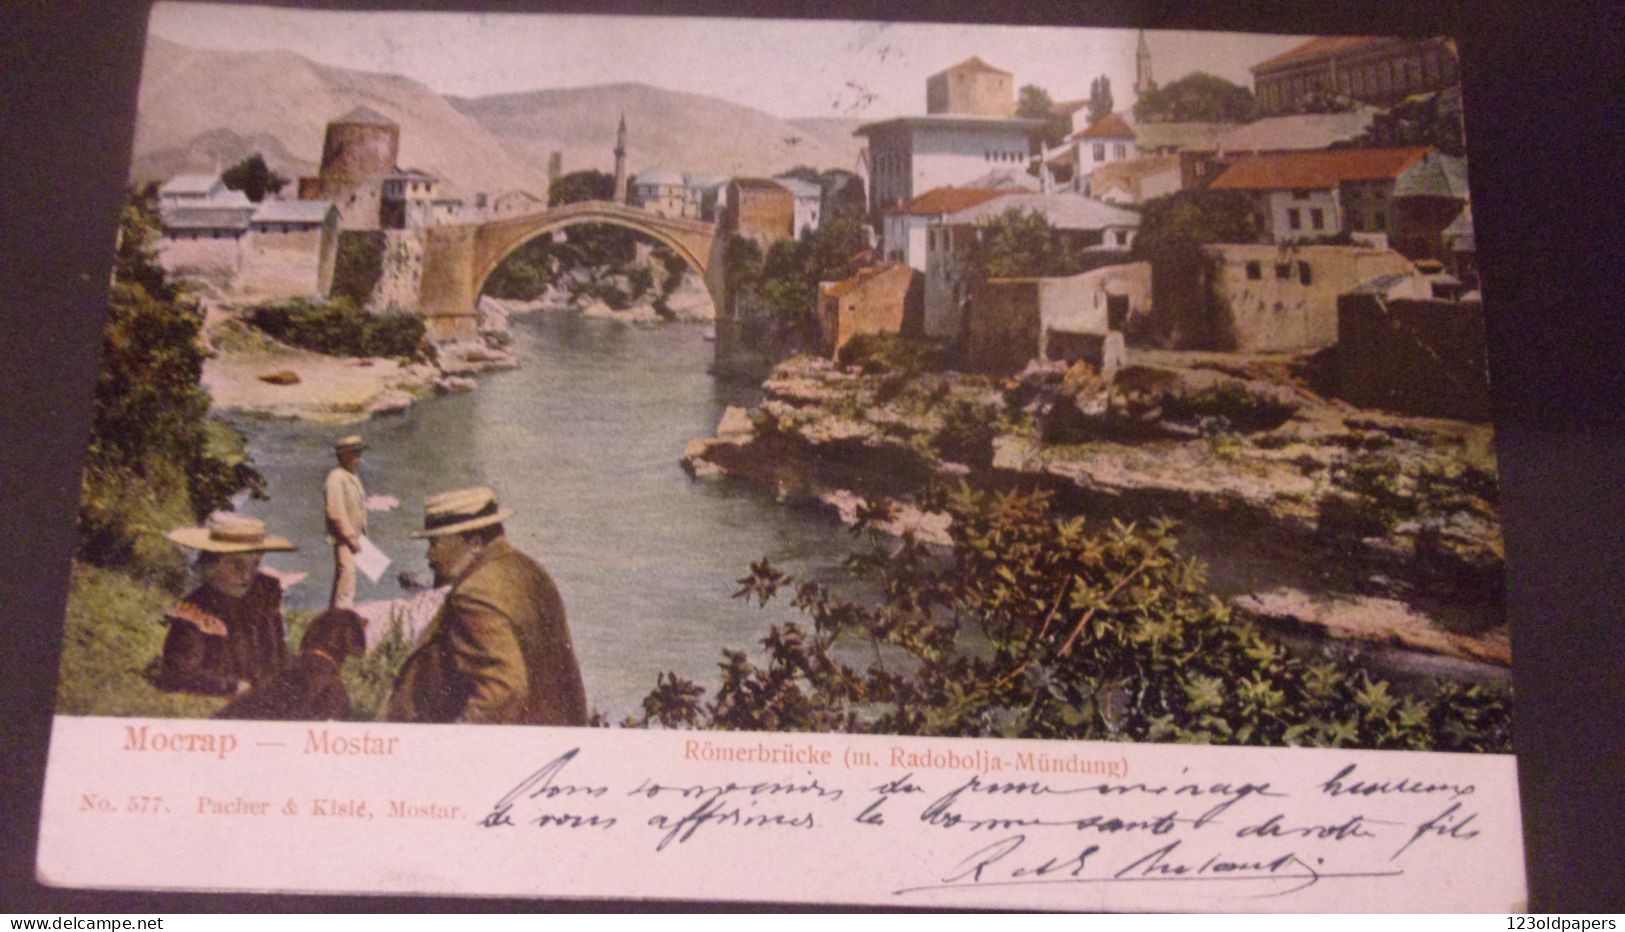 BOSNIA & HERZEGOVINA - BOSNA - MOSTAR 1905 ROMERBRUCKE RADOBOLJA MUNDUNG EDIT PACHER KISIE - Bosnia And Herzegovina